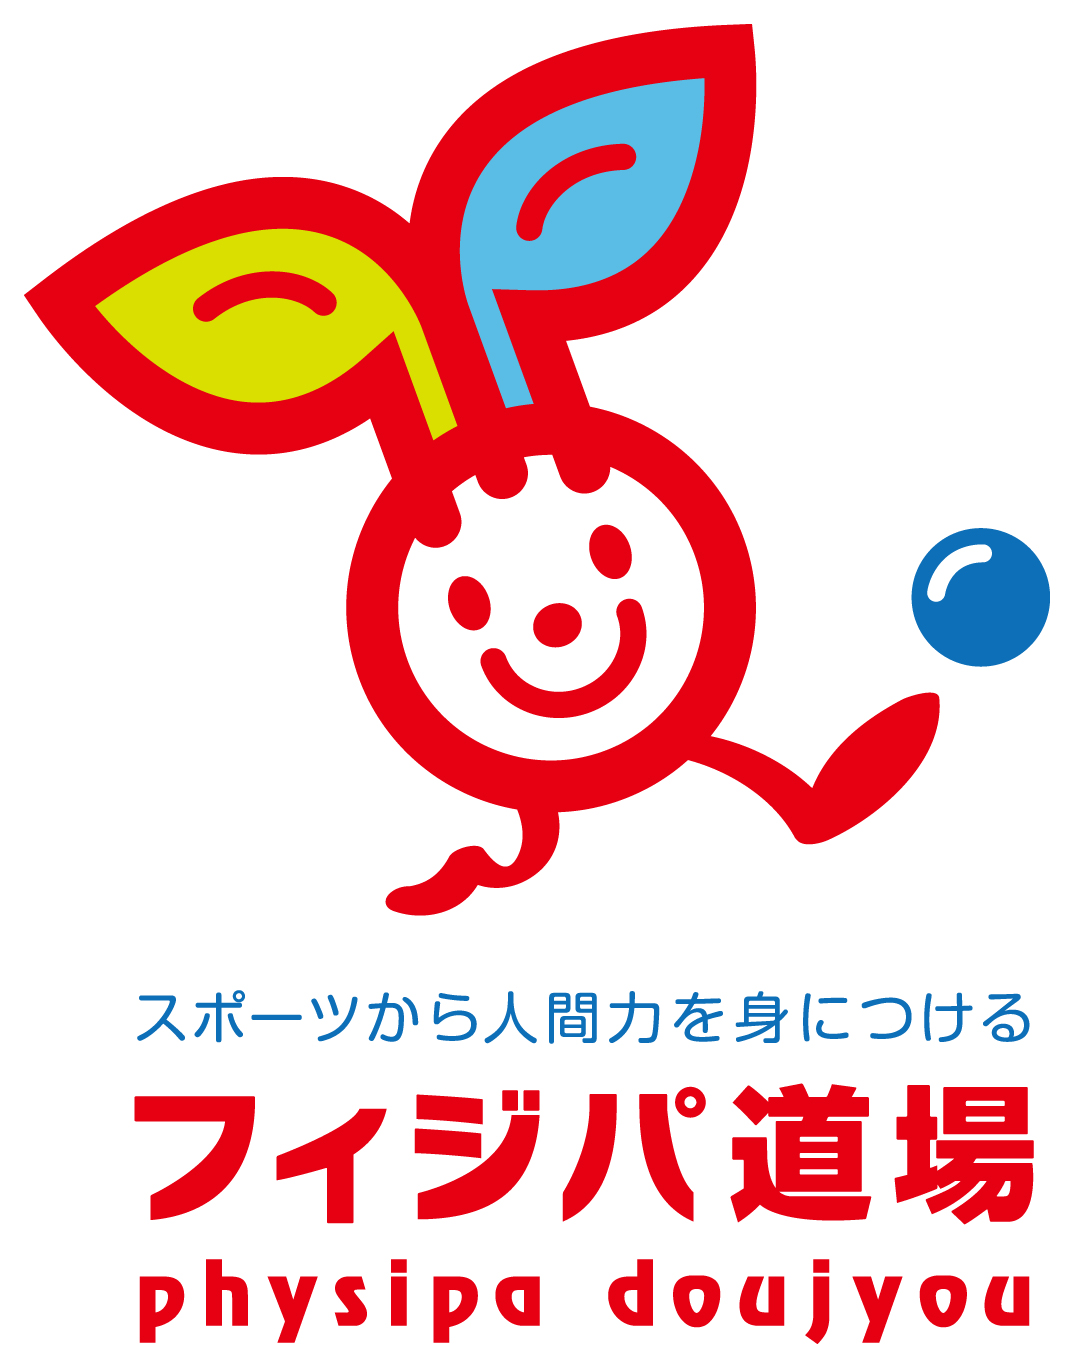 physipa-doujyou_logo_tate.jpg